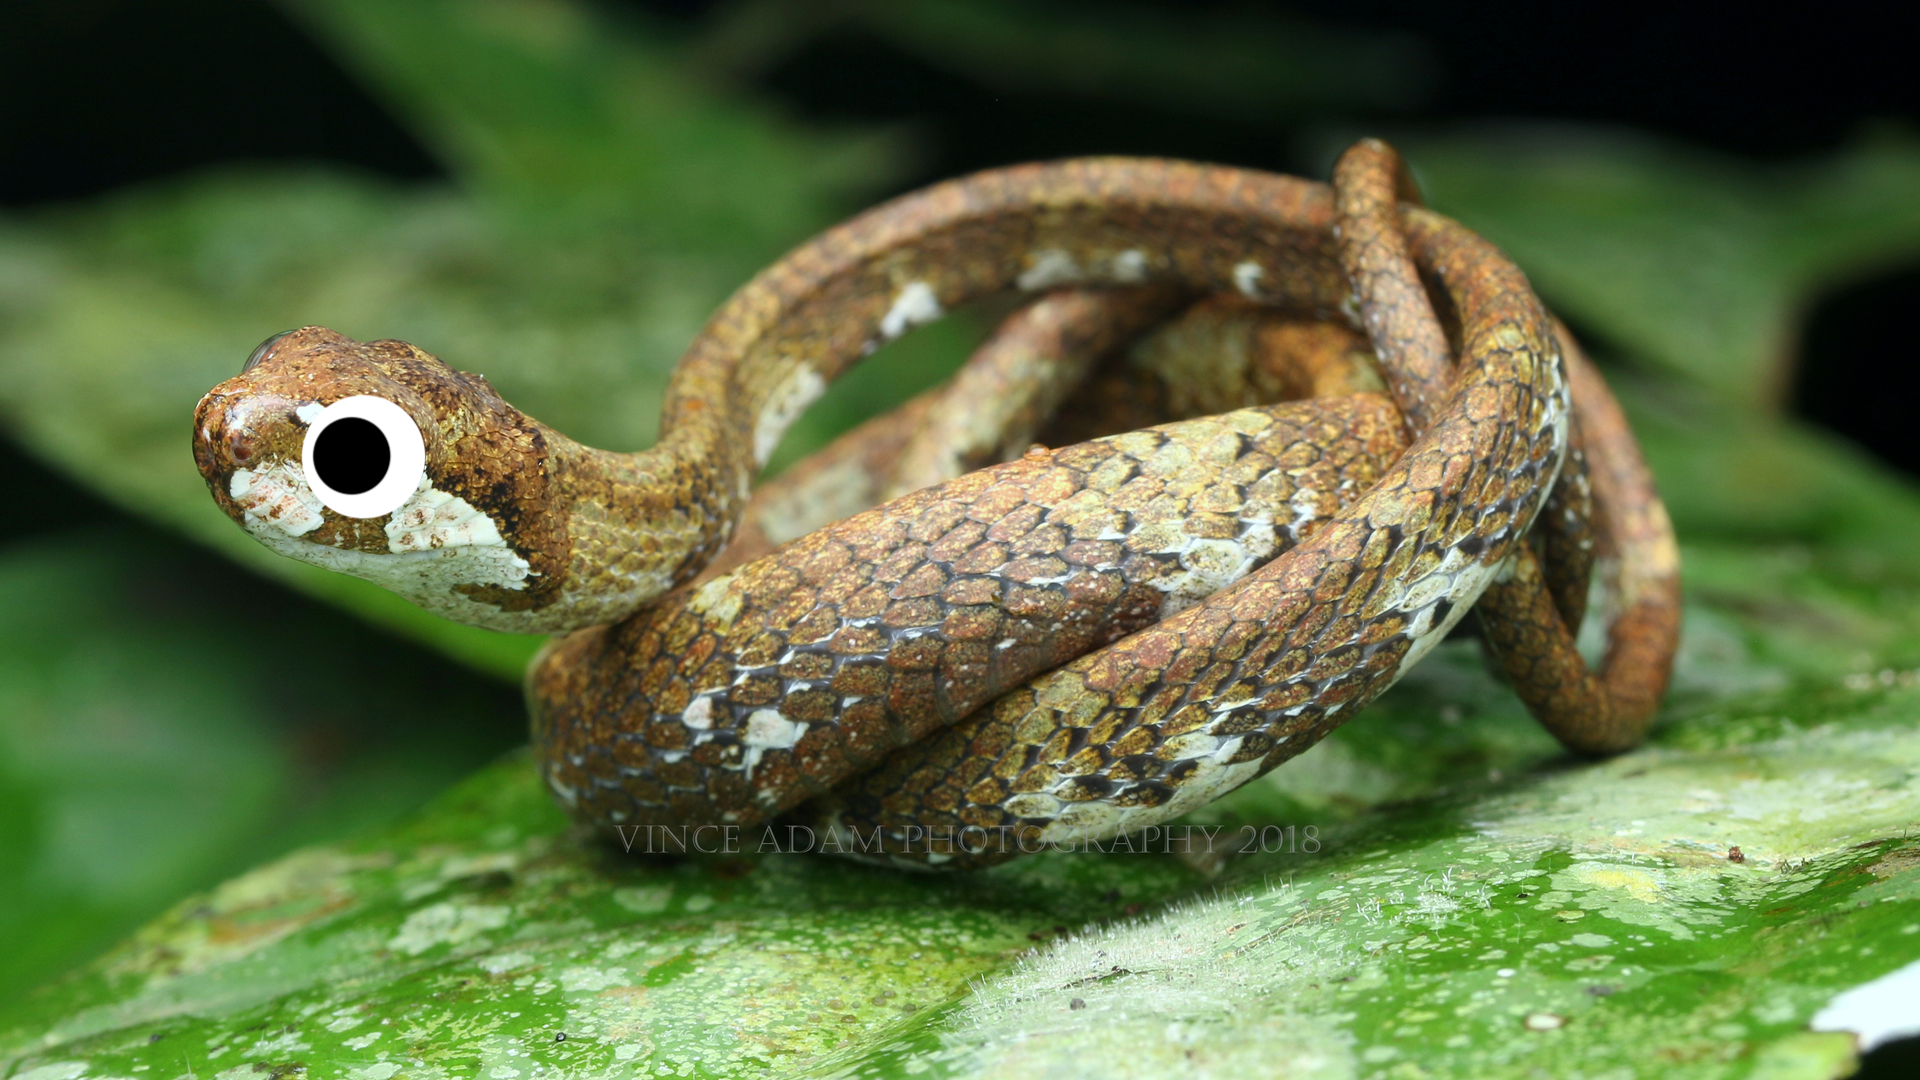 A blunt-headed slug snake